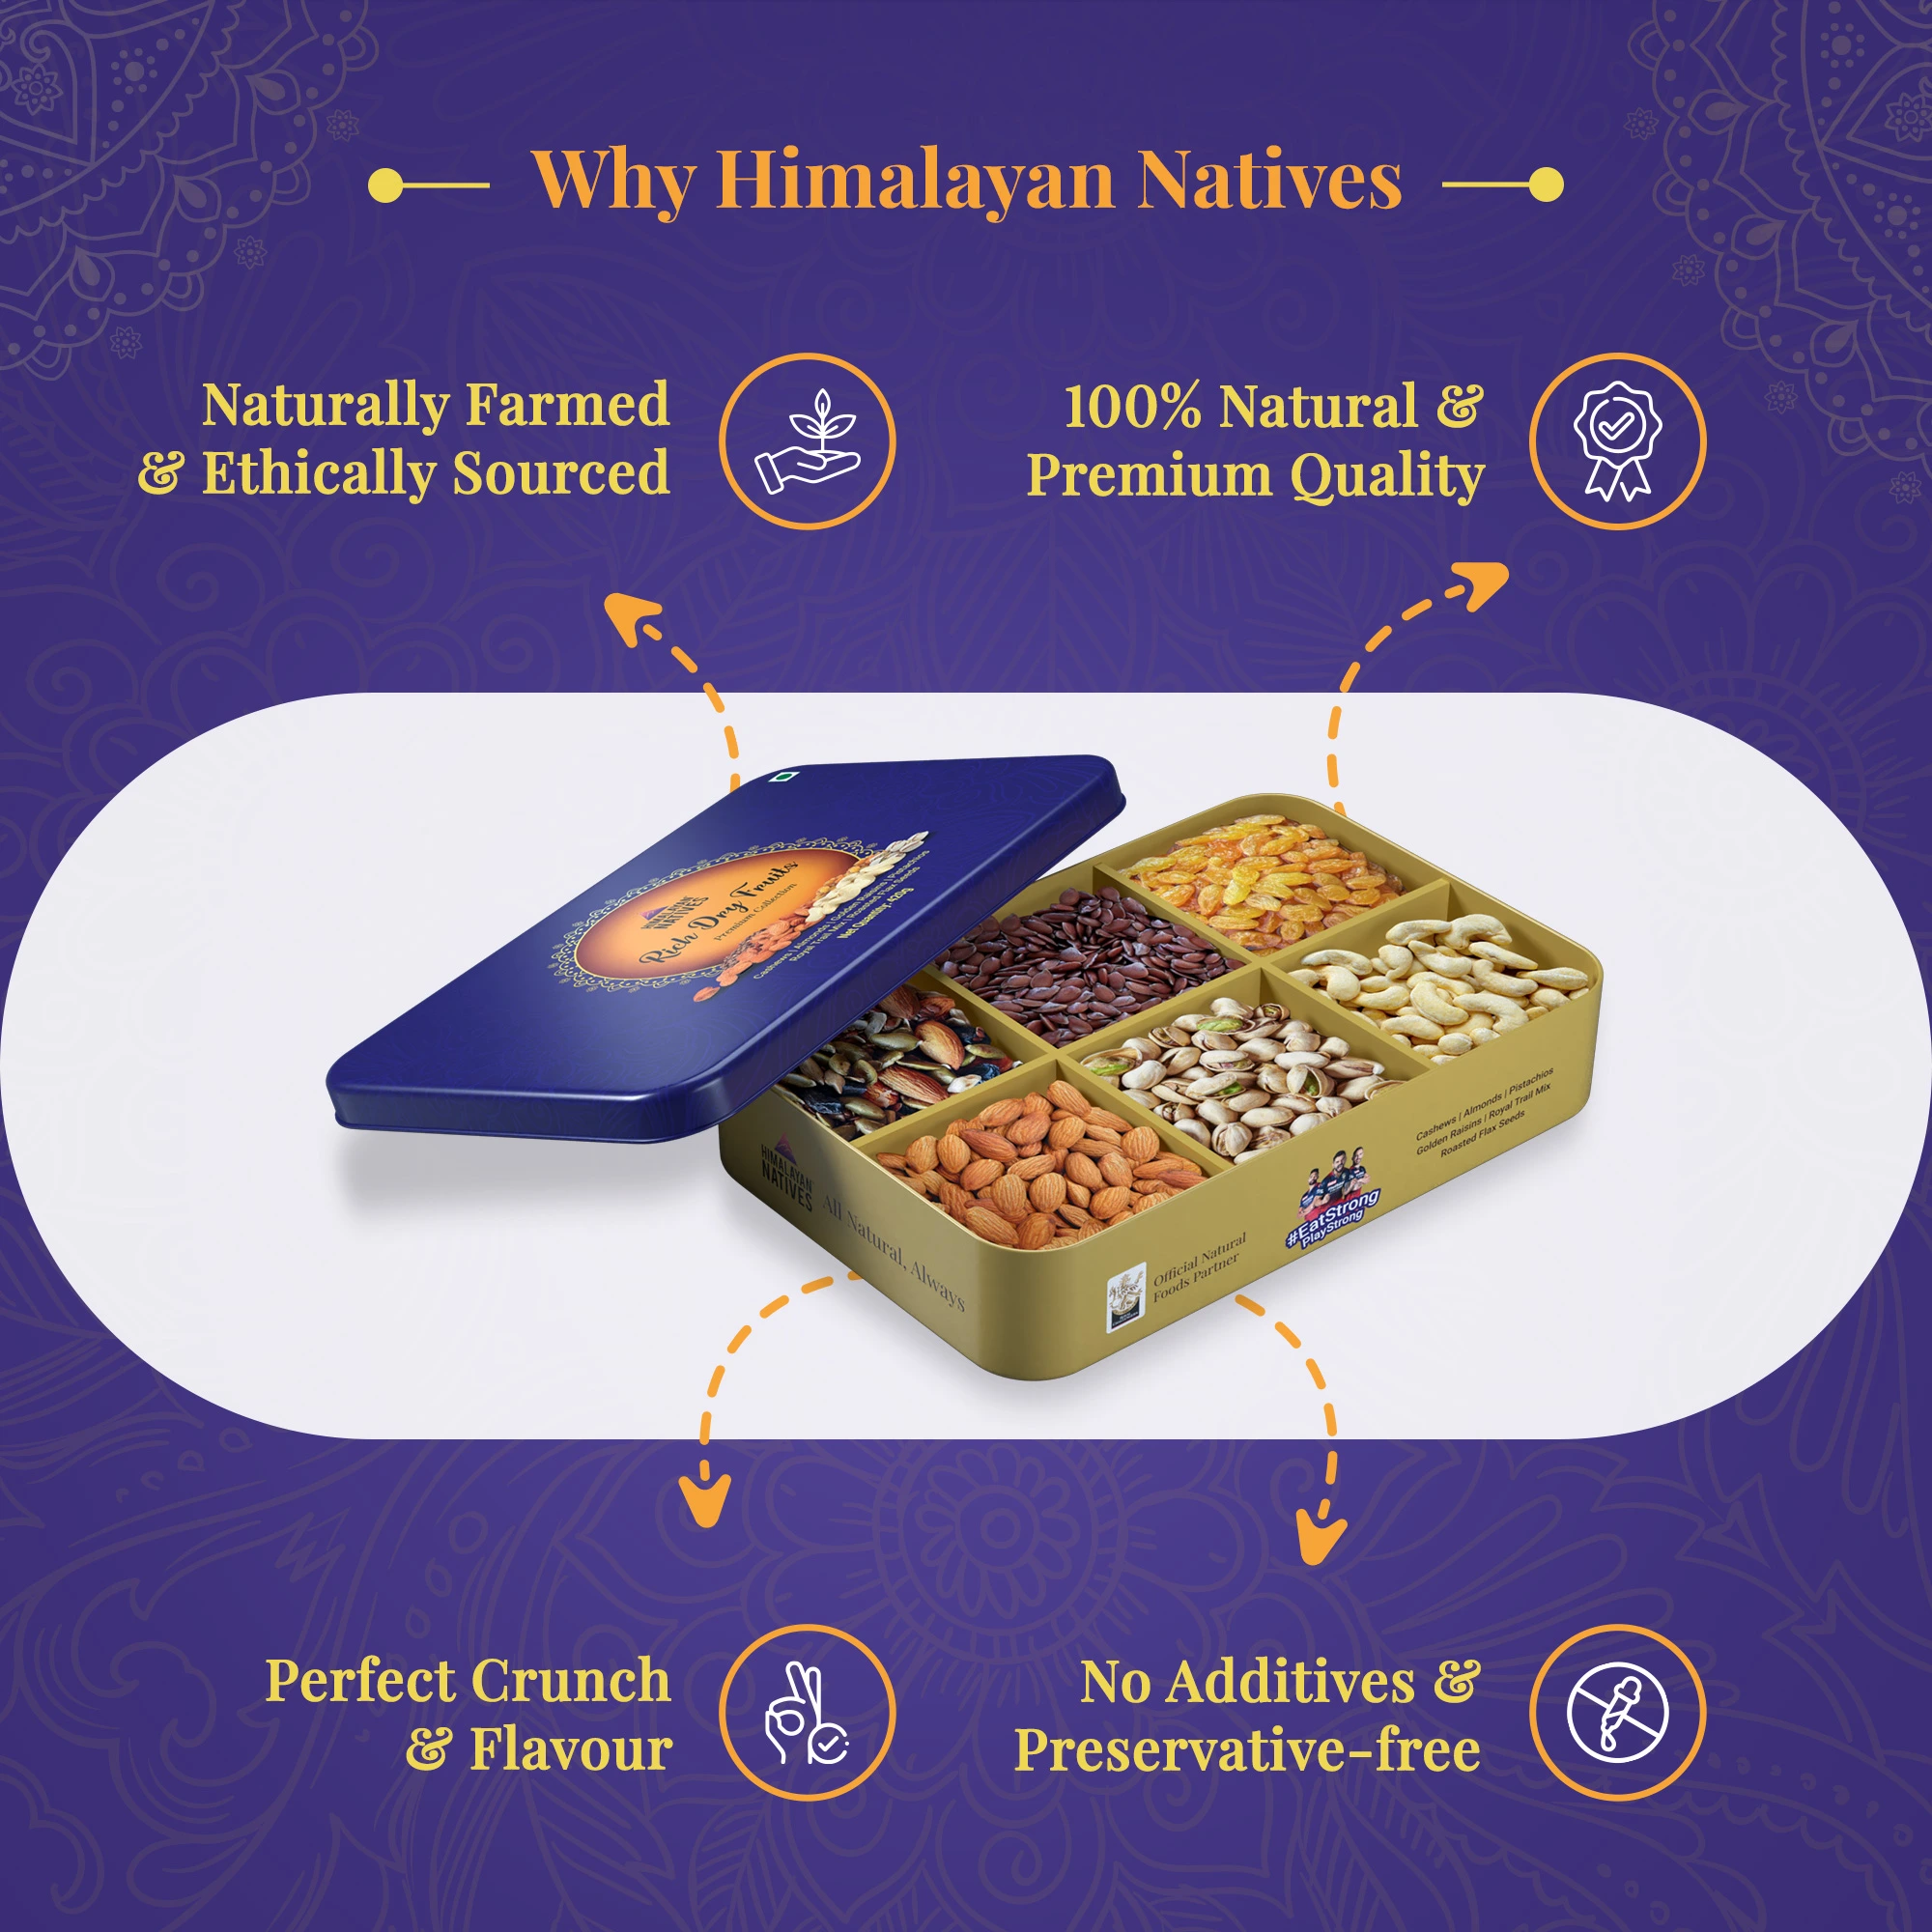 Why Himalayan Natives - Royal Seeds & Nuts Box Premium Collection